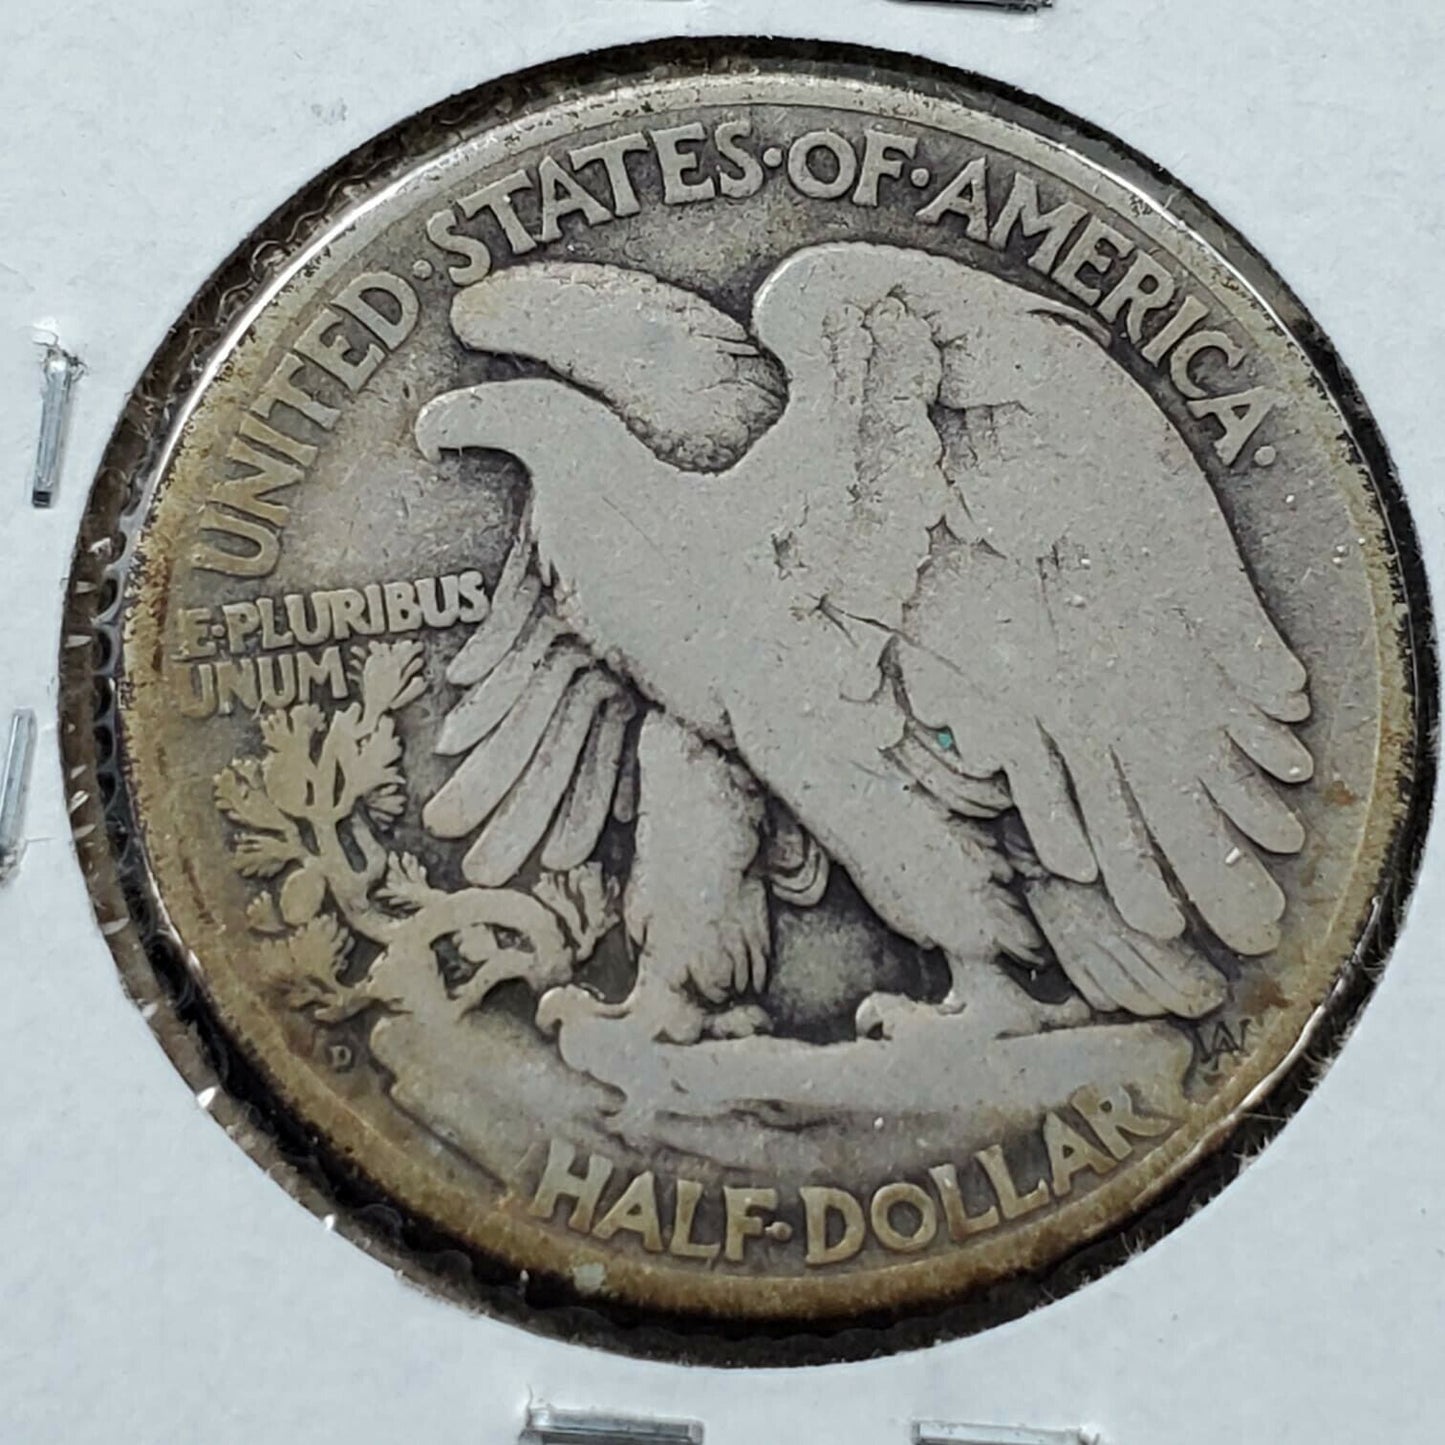 1929 D Walking Liberty Silver Half Dollar Coin Choice Good Circulated